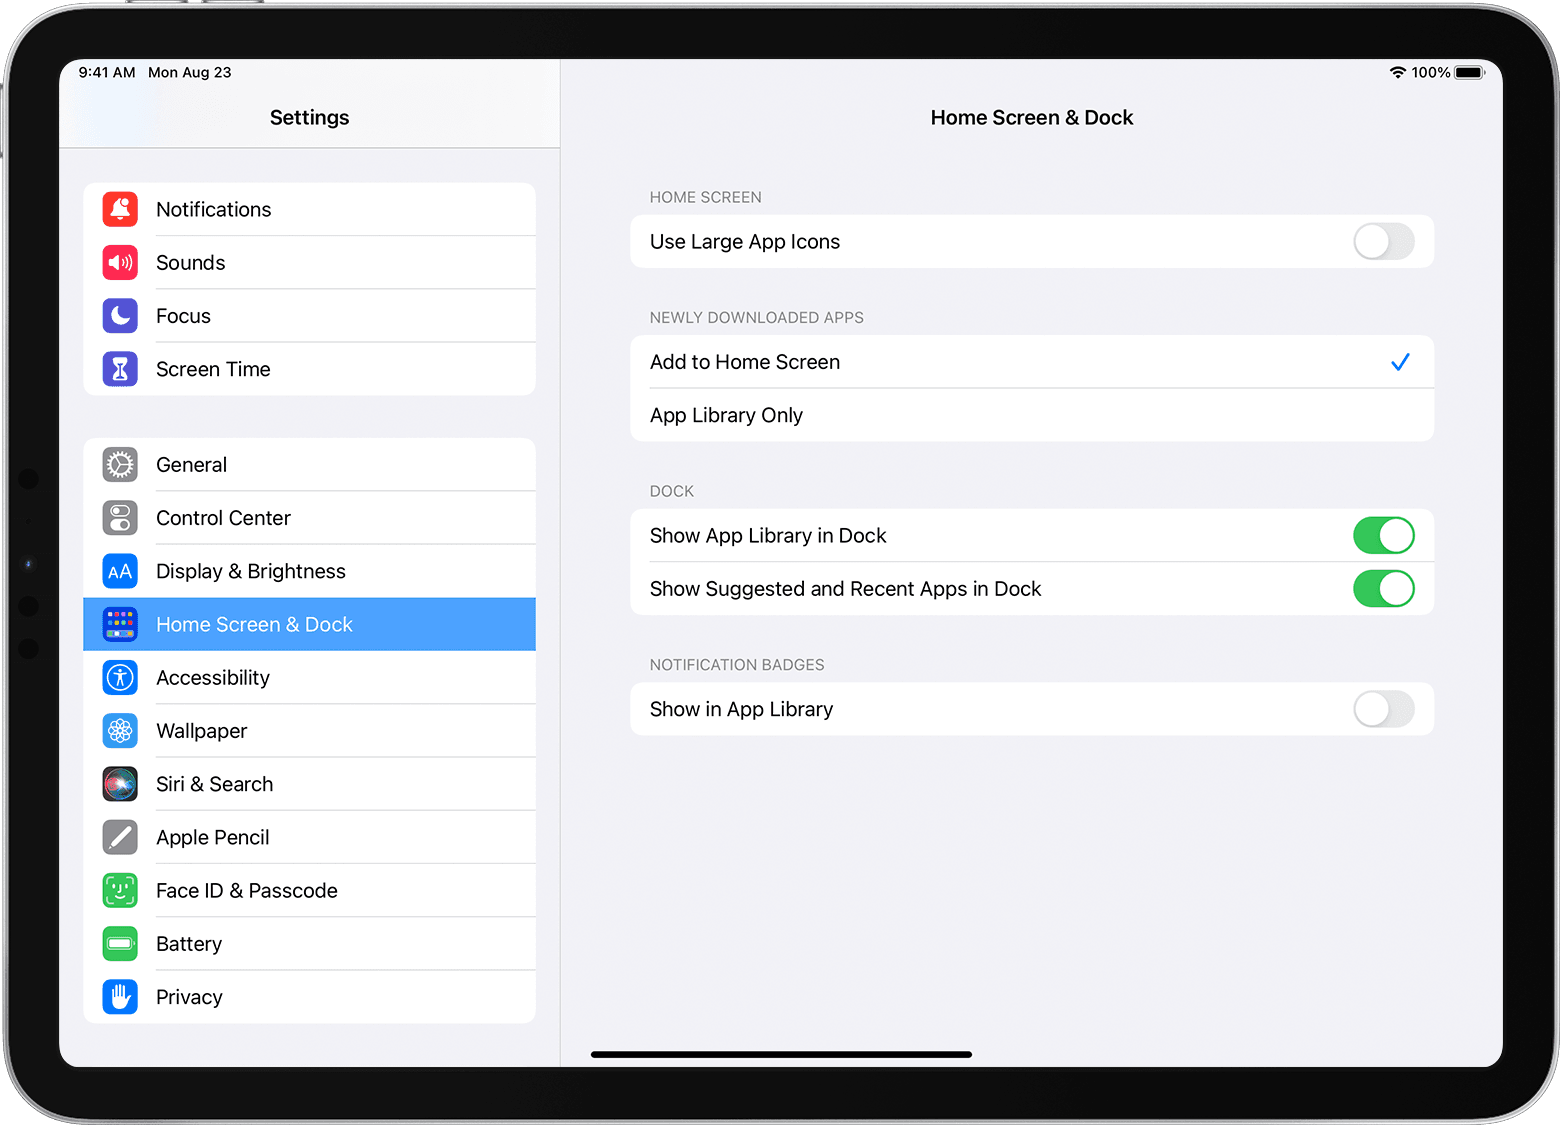 iPad screen showing Home Screen & Dock settings